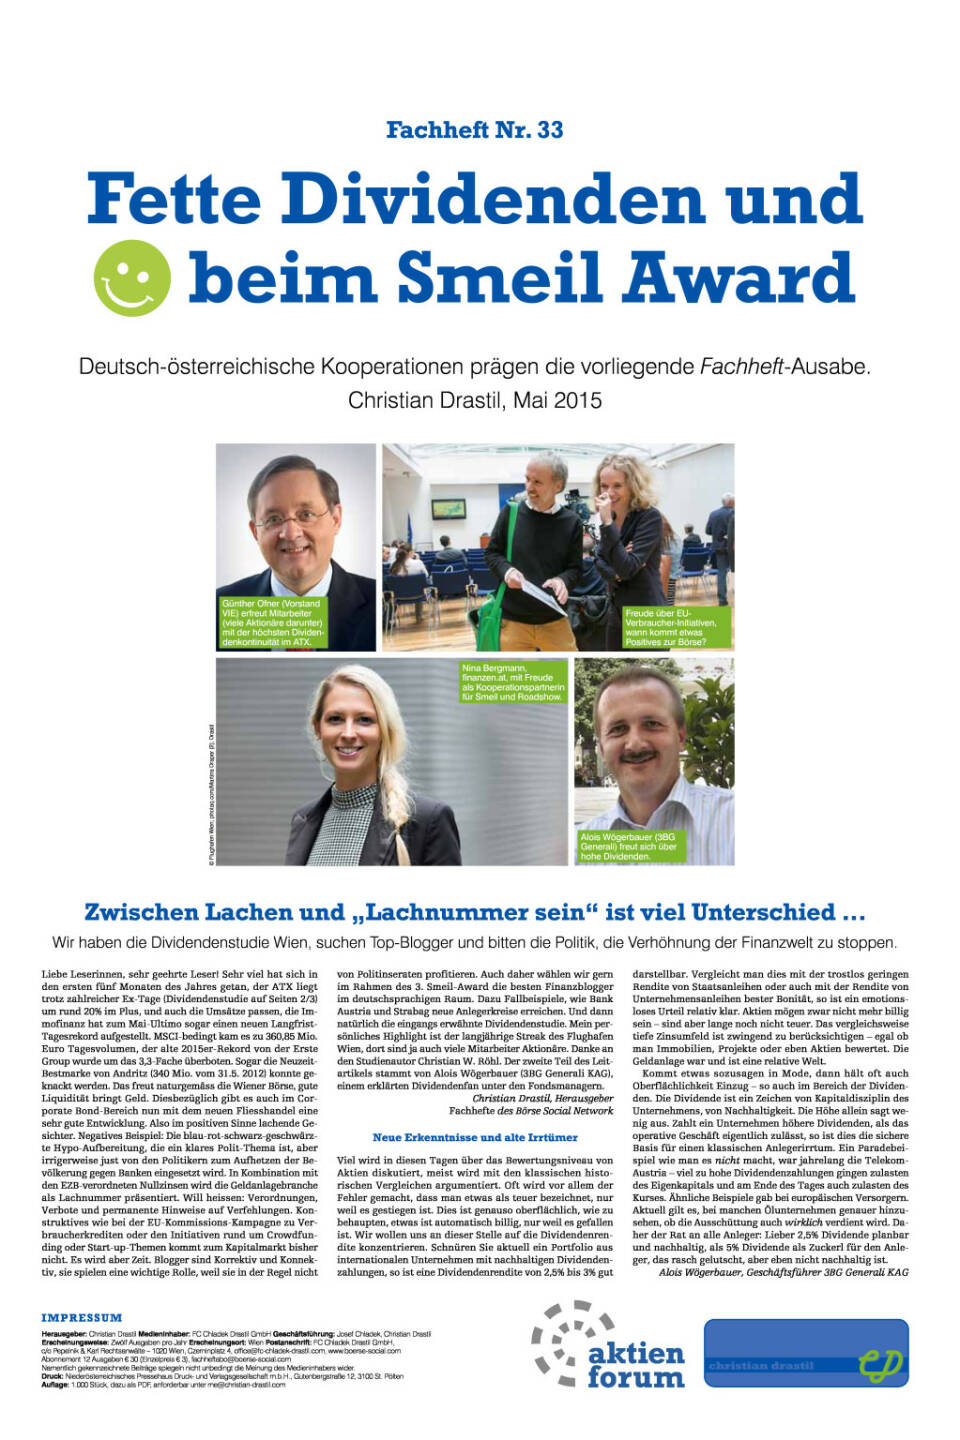 Fachheft 33: Dividendenstudie und Smeil Award 2015, Seite 1/8, komplettes Dokument unter http://boerse-social.com/static/uploads/file_79_fachheft_33.pdf